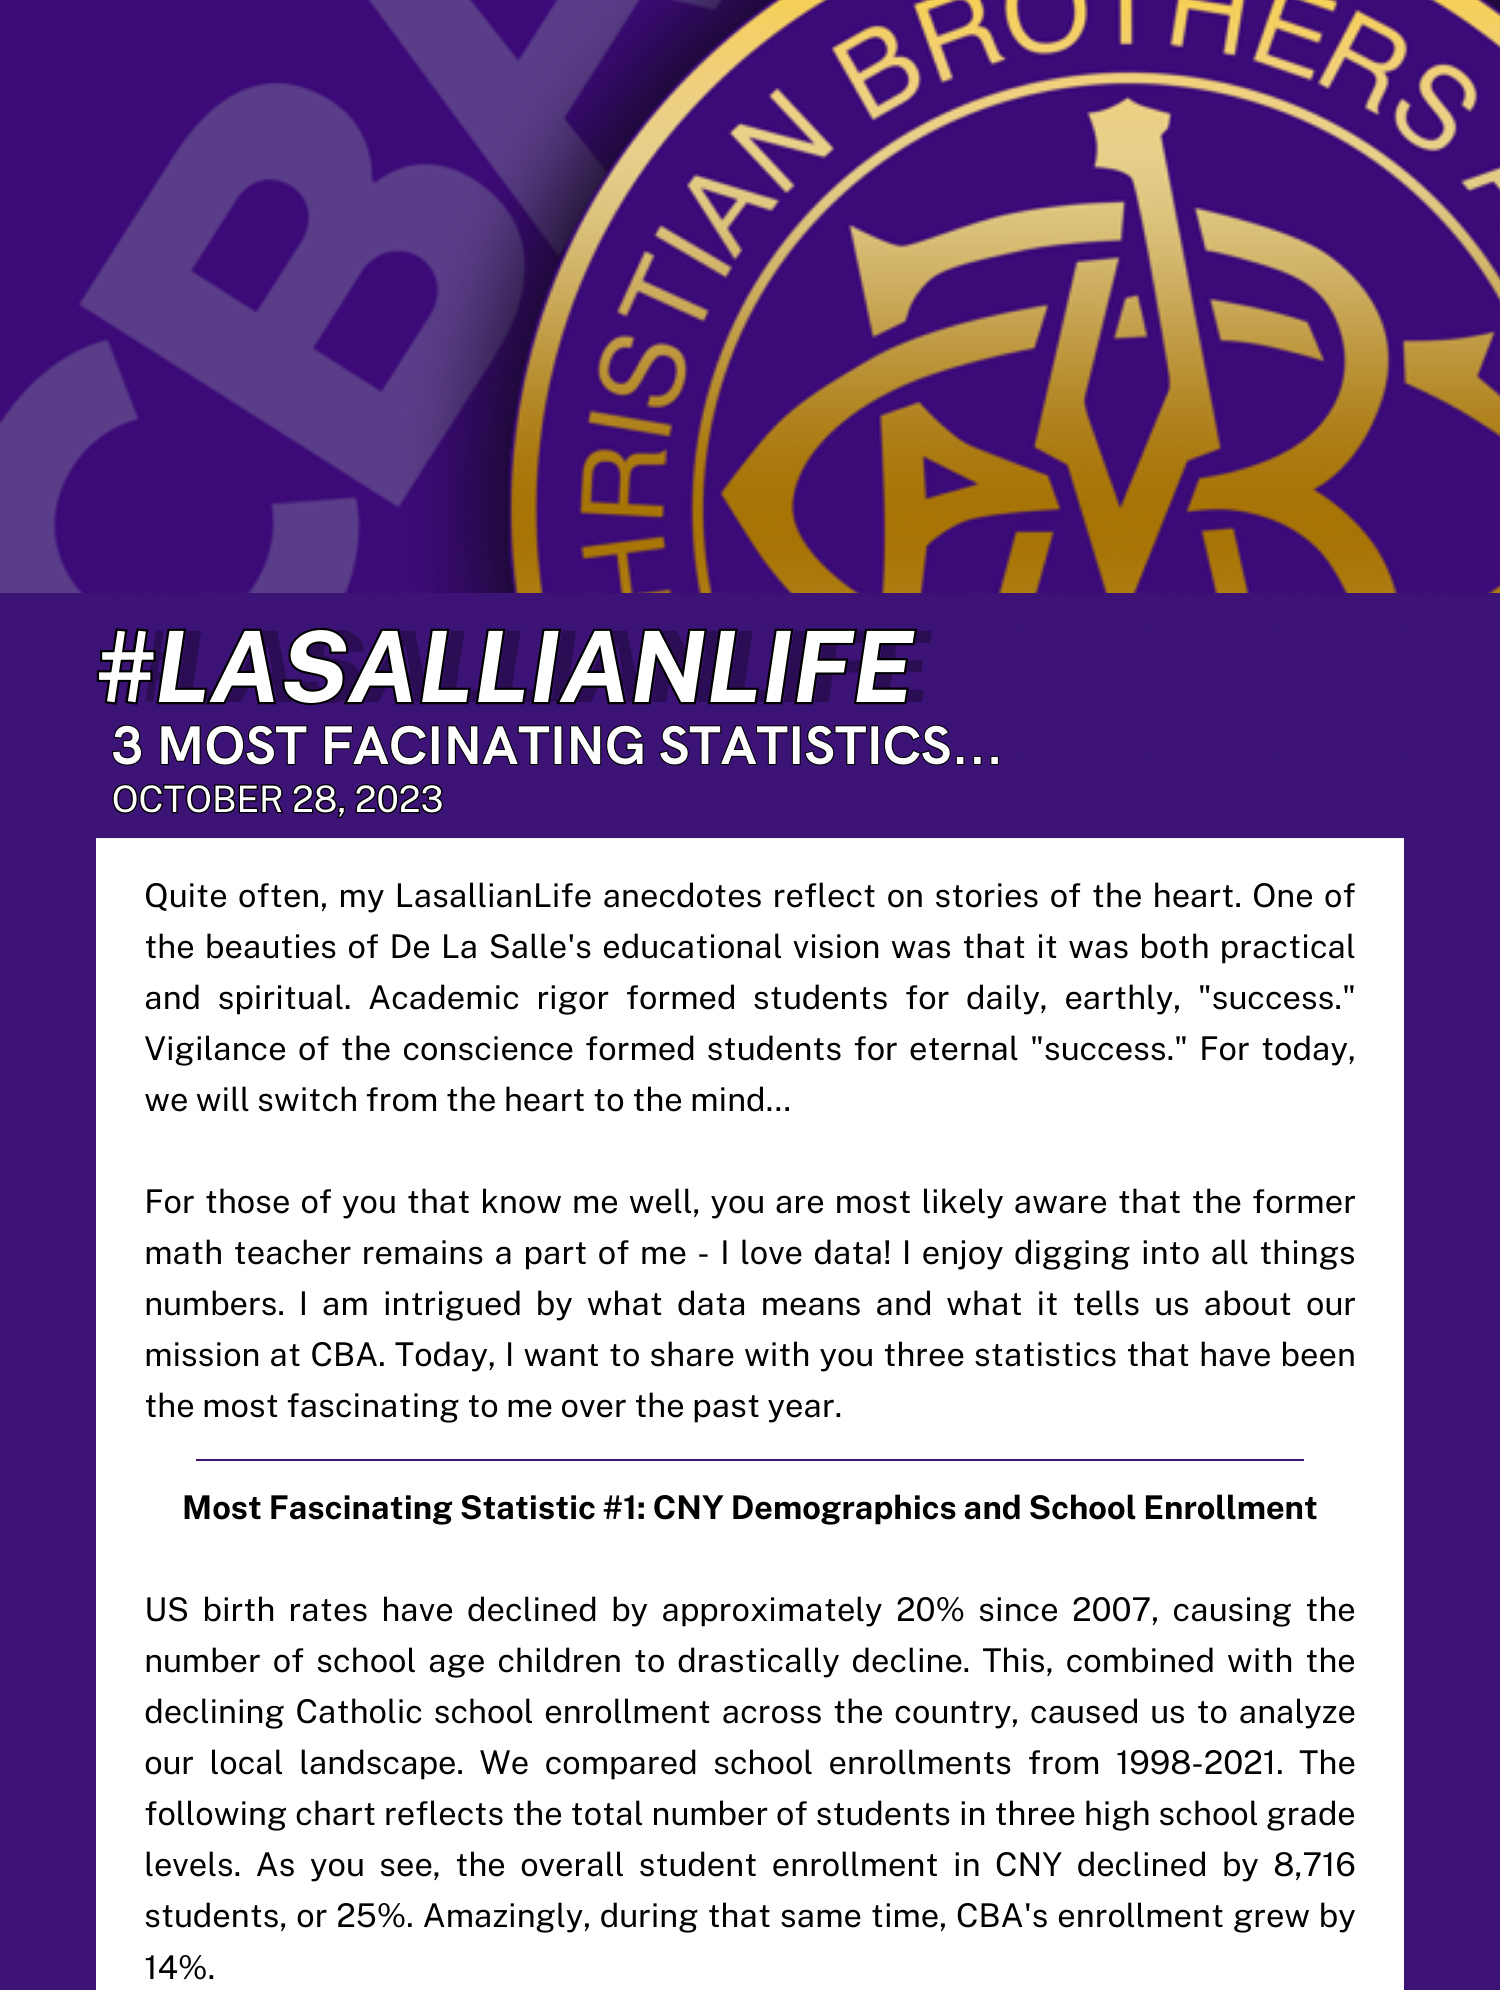 #LasallianLife : 3 Most Fascinating Statistics